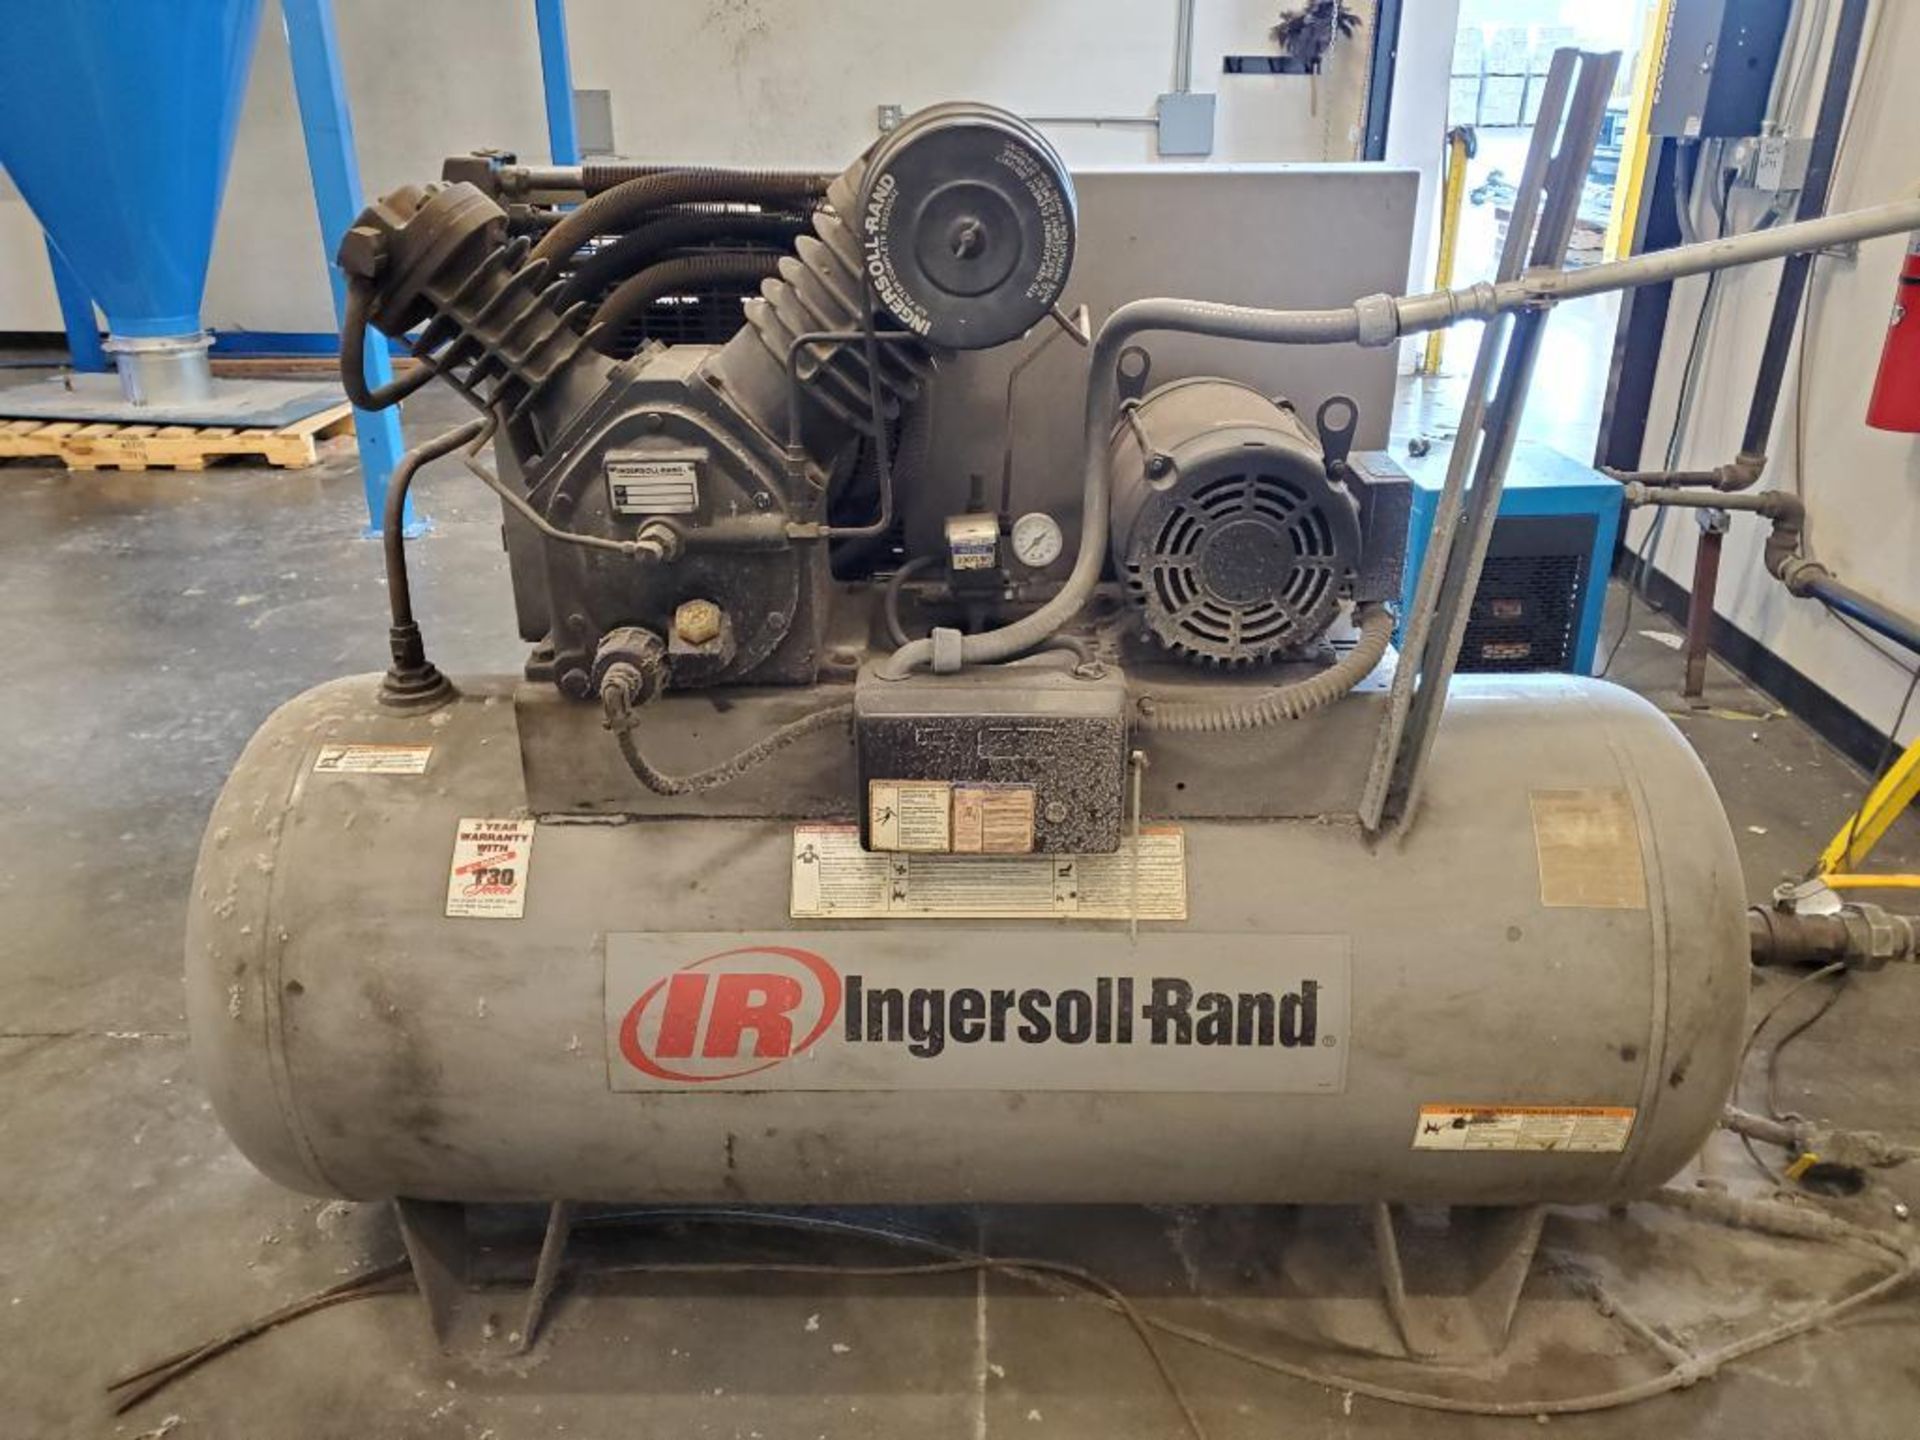 Ingersoll Rand 120-Gal. Air Compressor, Model: T30, 35.8 CFM, S/N 010950285,1,850 RPM, 175 PSIG,  w/